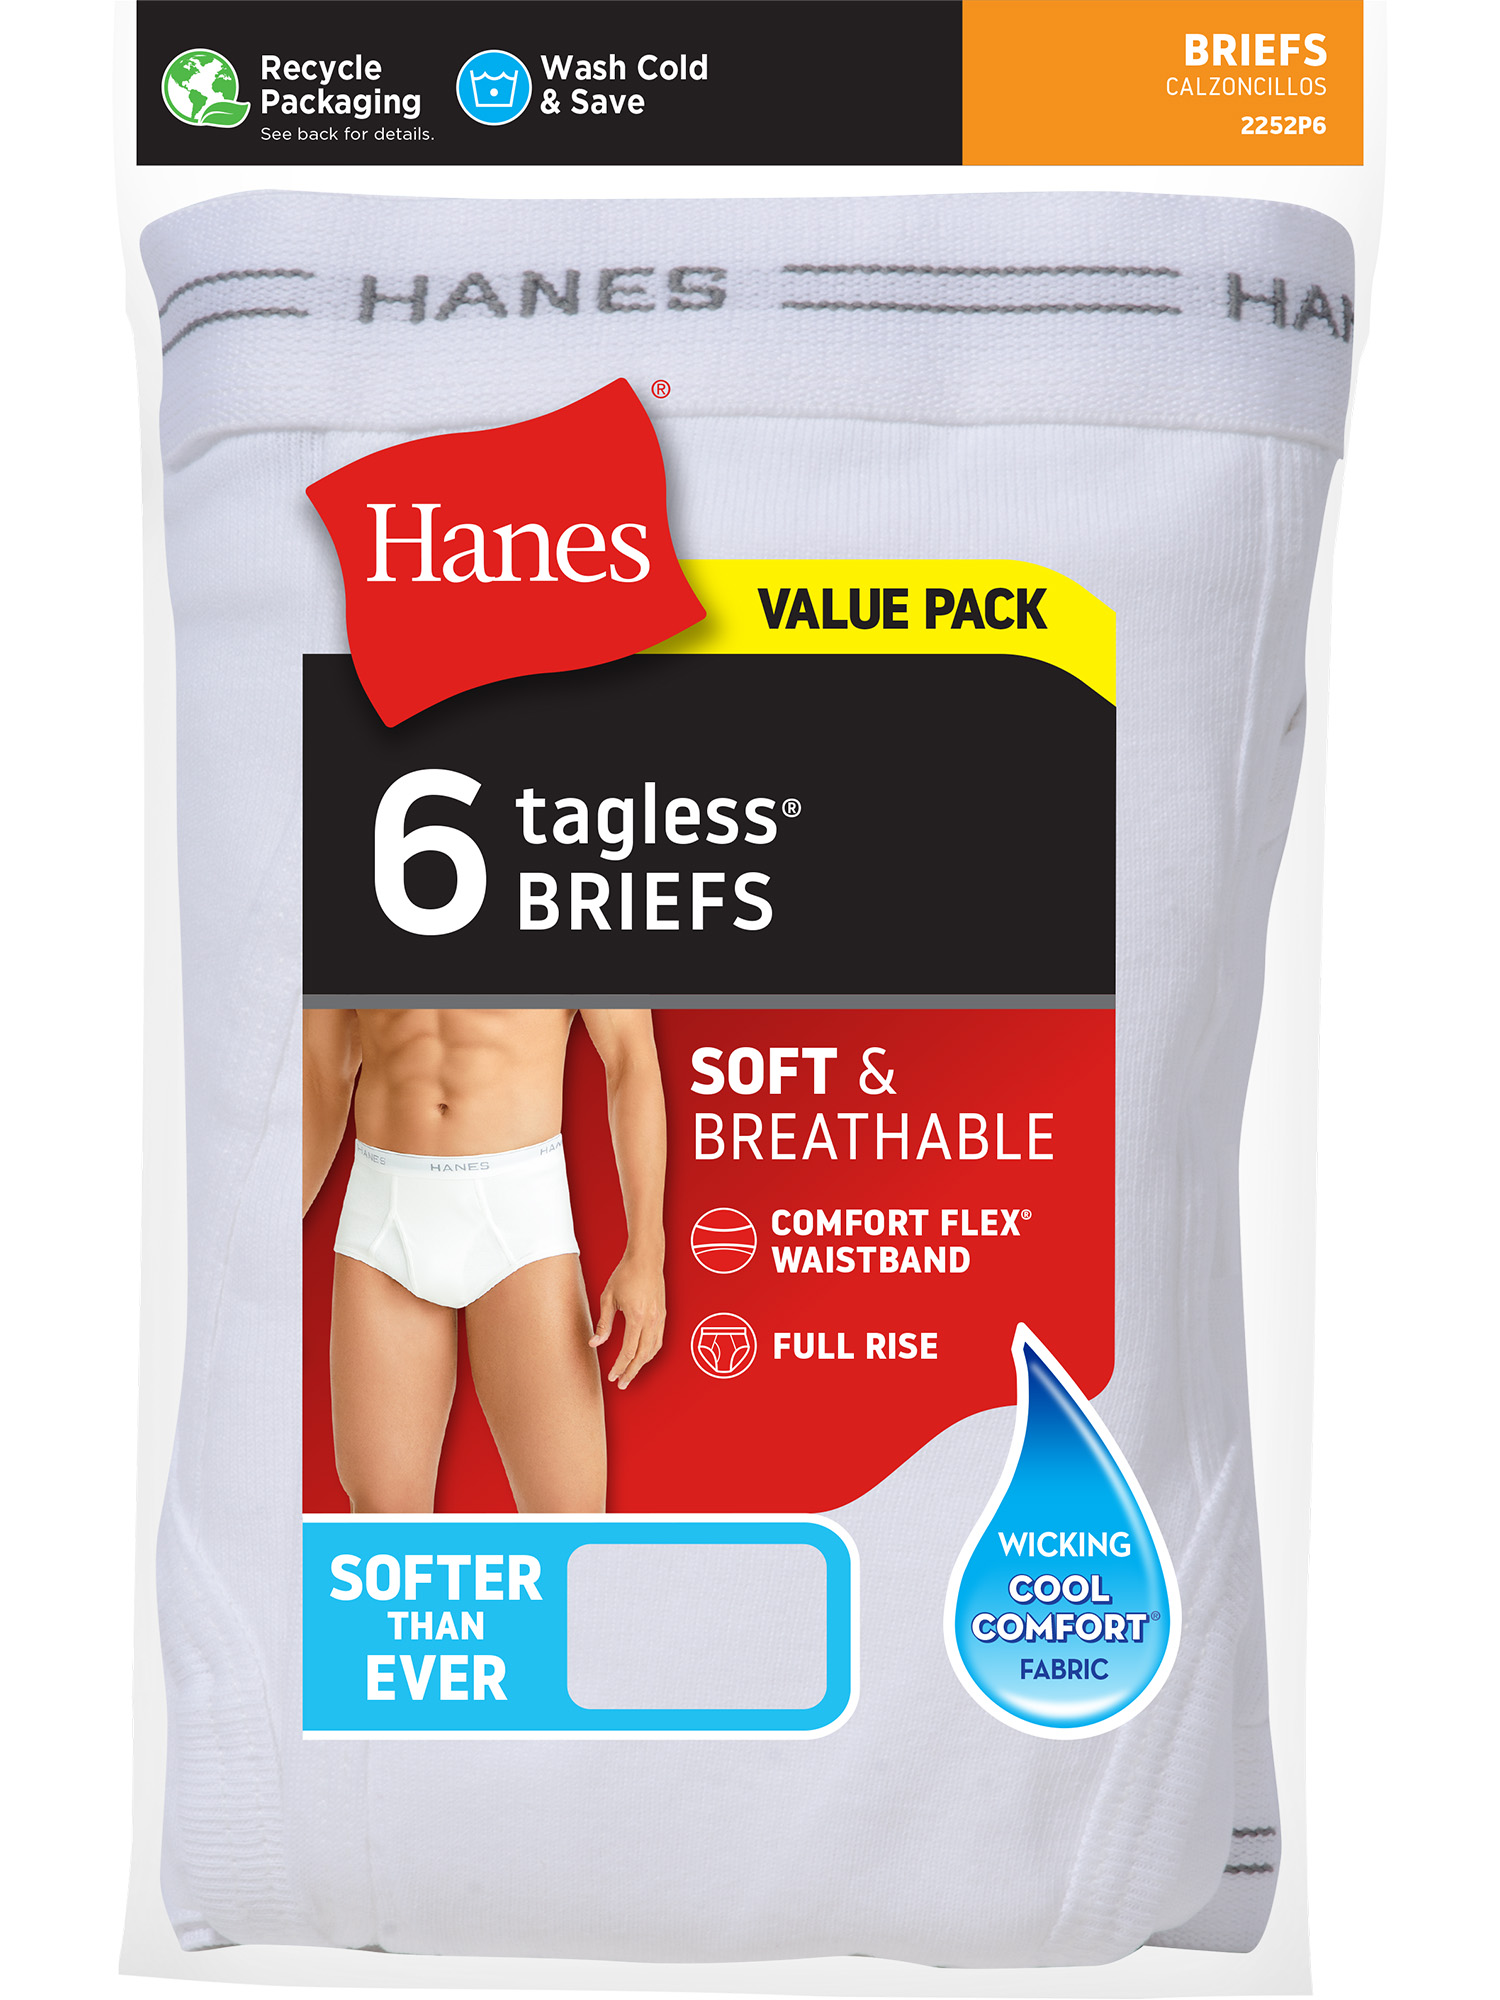 Hanes Men's Value Pack White Briefs, 6 Pack - image 2 of 9